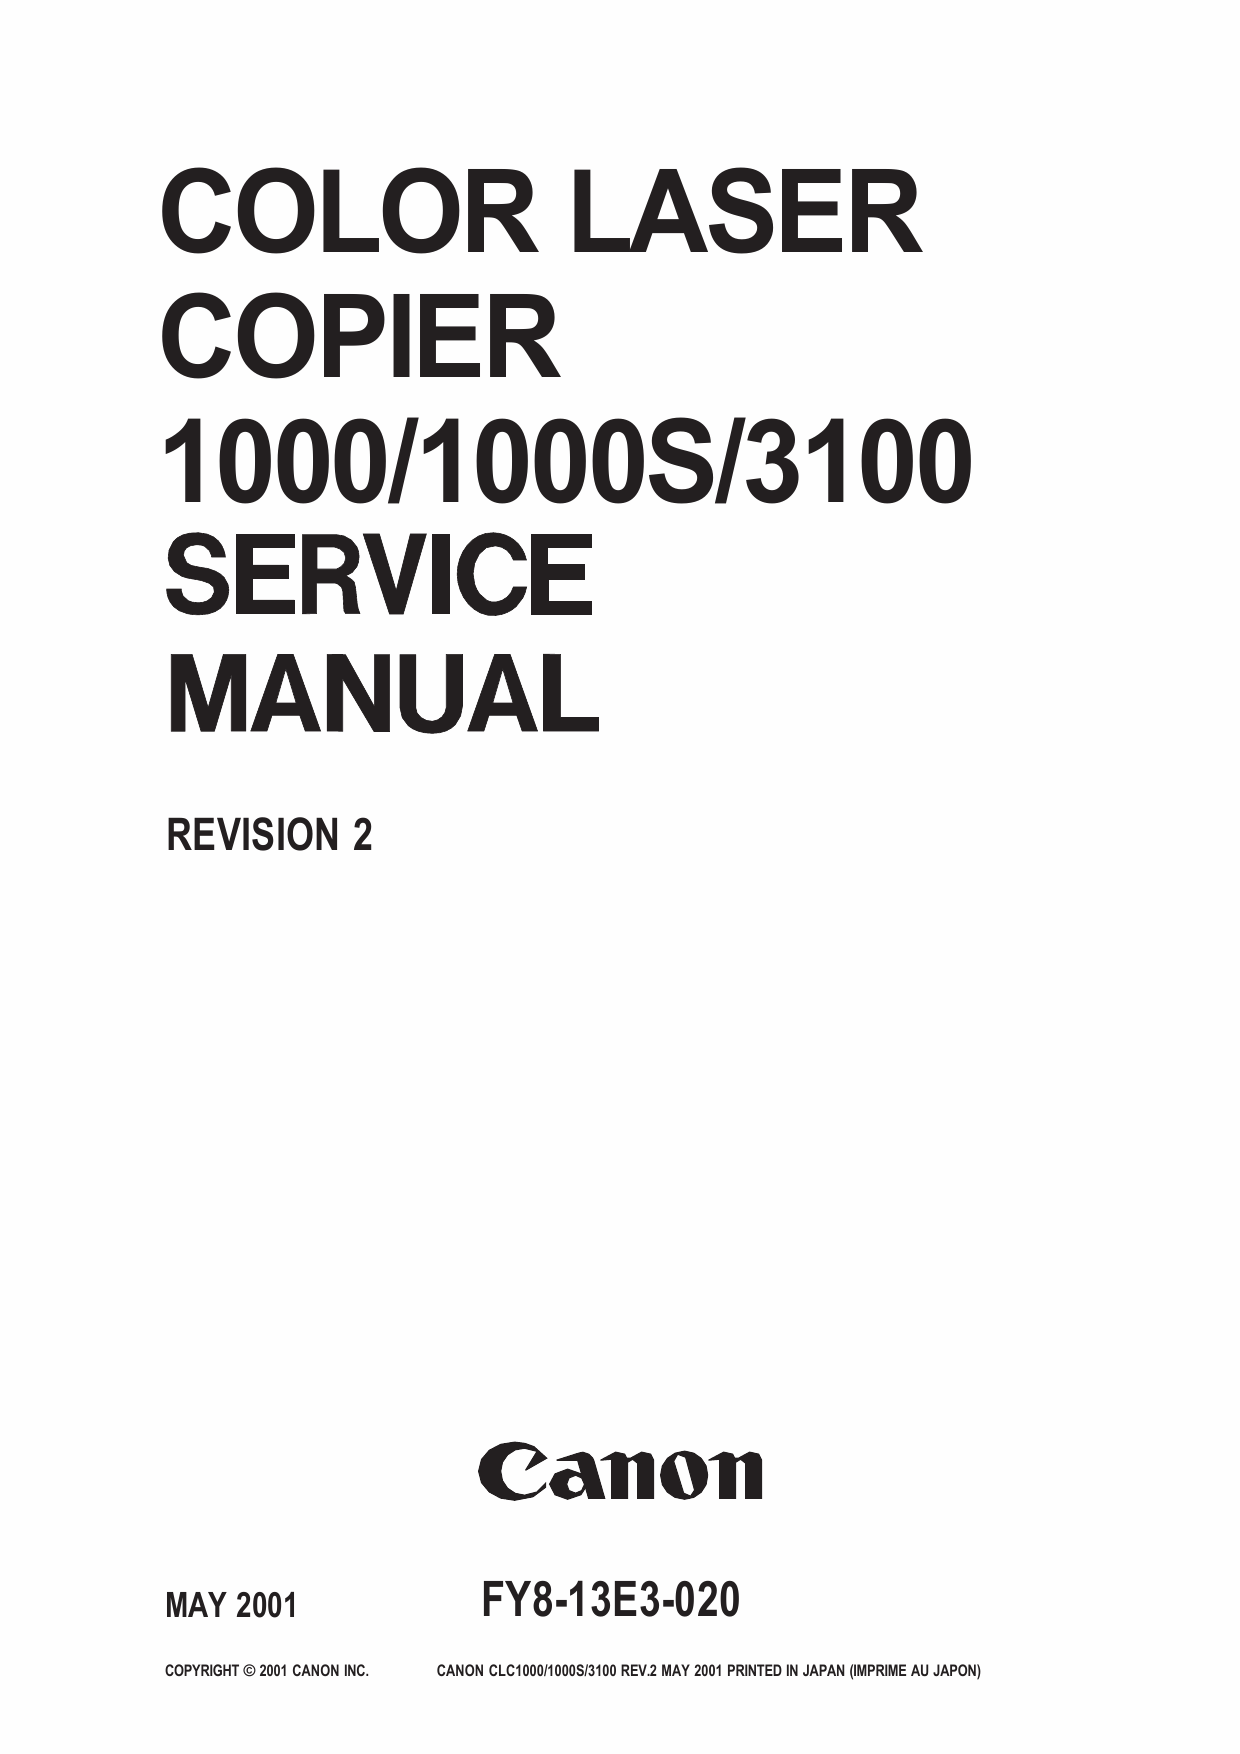 Canon ColorLaserCopier CLC-1000 1000S 3100 Parts and Service Manual-1